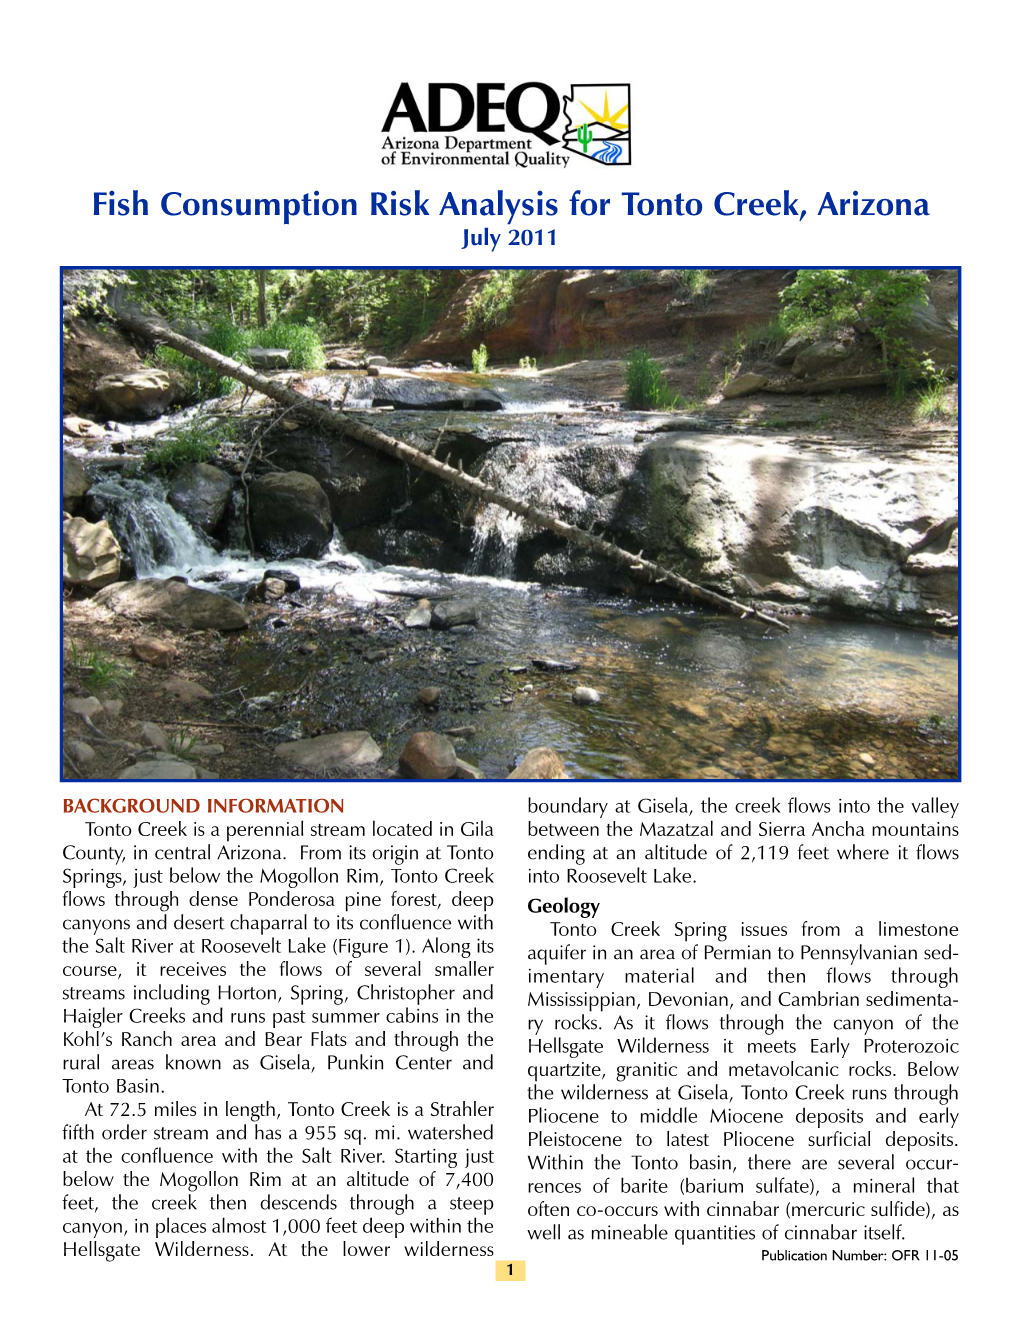 Tonto Creek Fish Advisory Risk Analysis 7-11